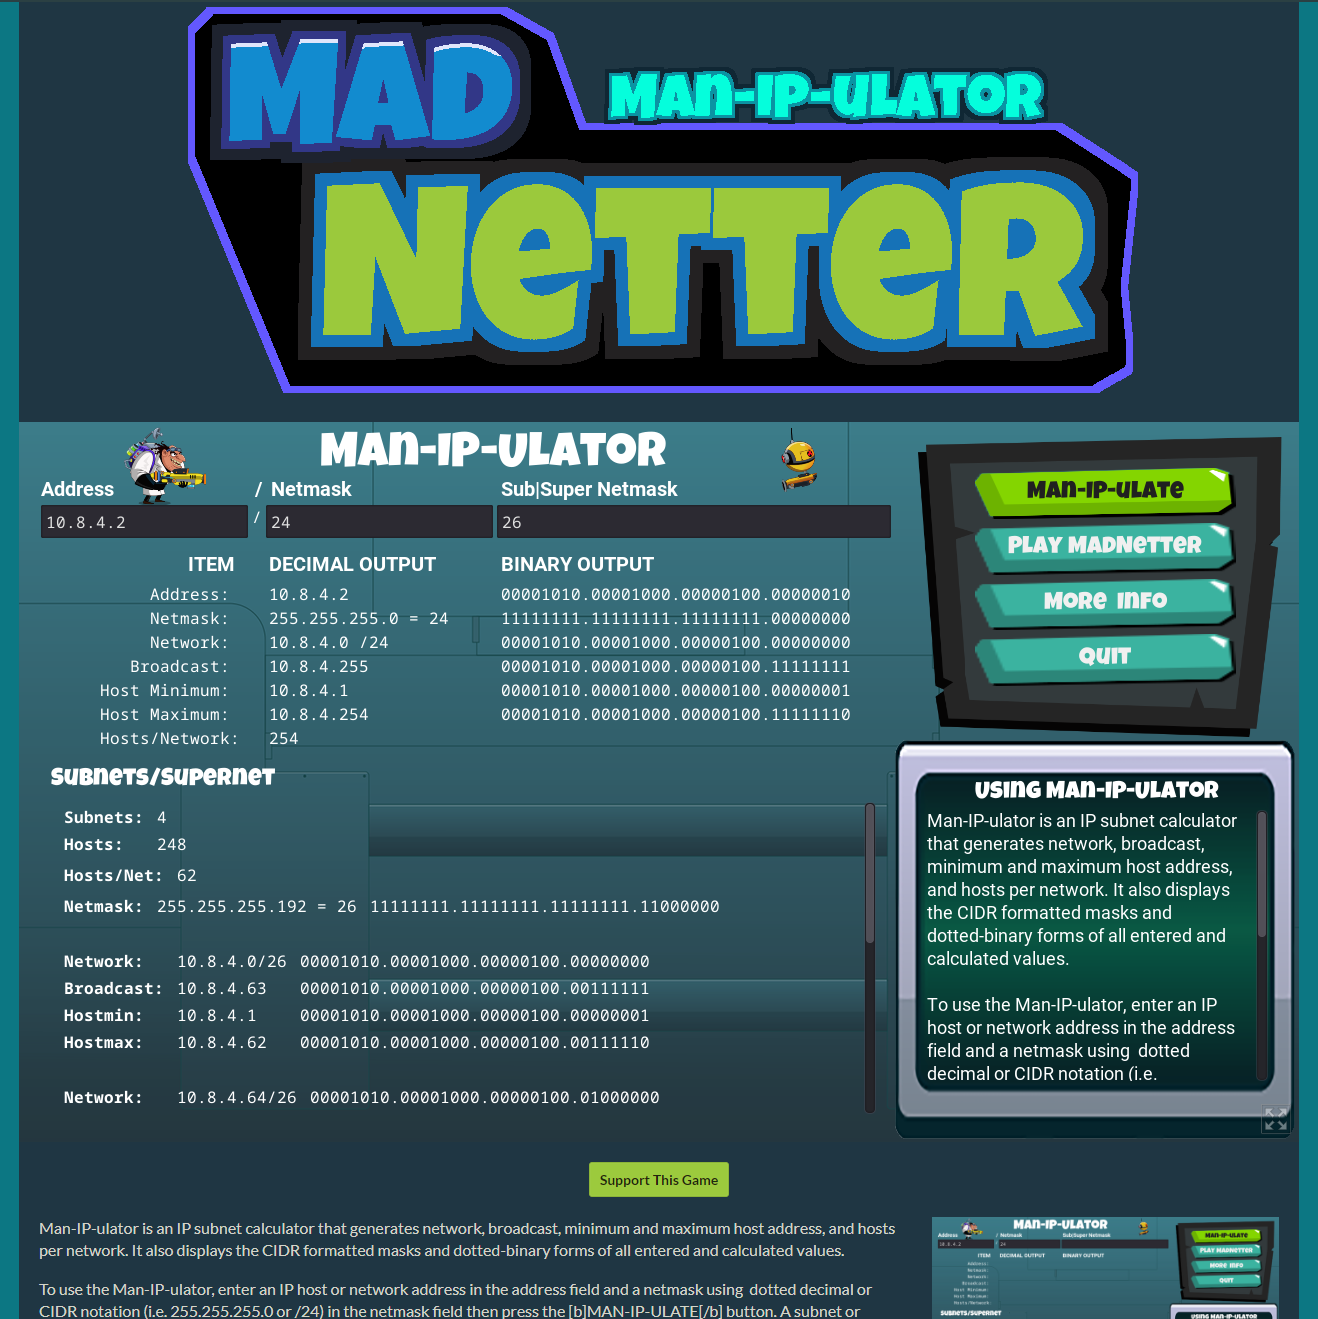 Screenshot of Man-IP-ulator/Mad Netter app/game